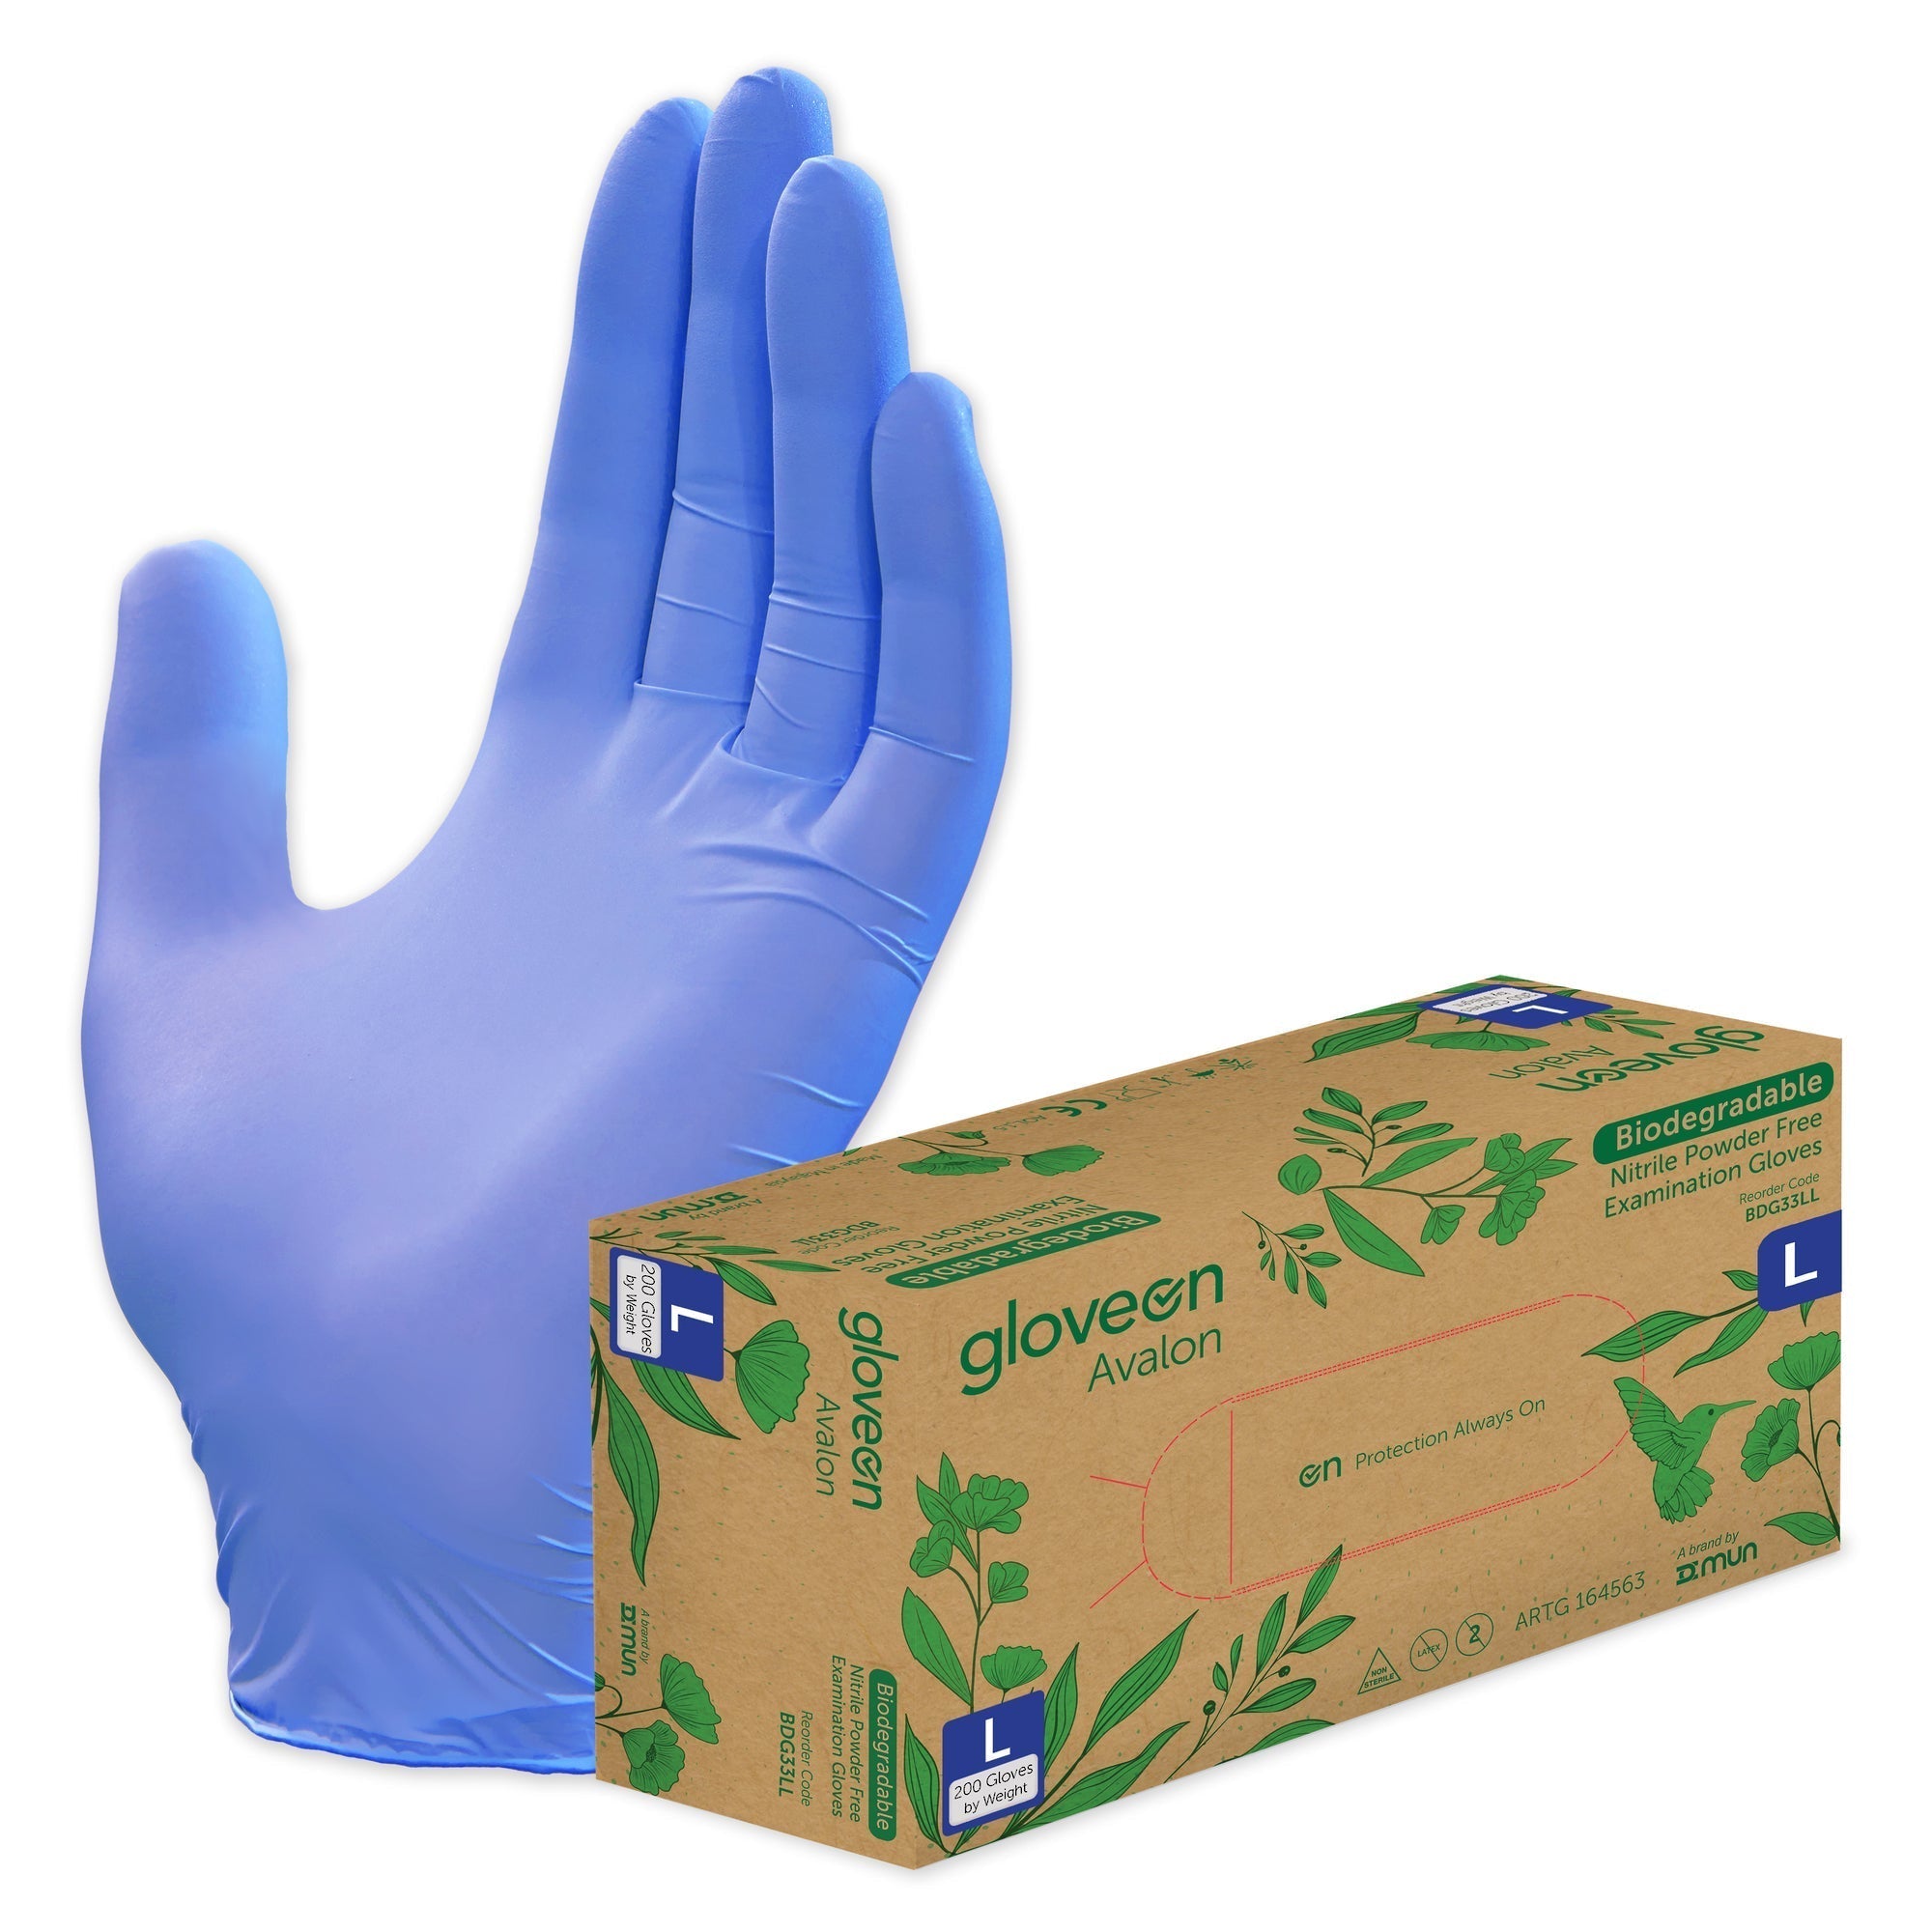 Biodegradable Nitrile Exam Gloves, Powder Free, Non-Sterile, Fingertip Textured, Standard Cuff, Violet Blue - Box of 200, L